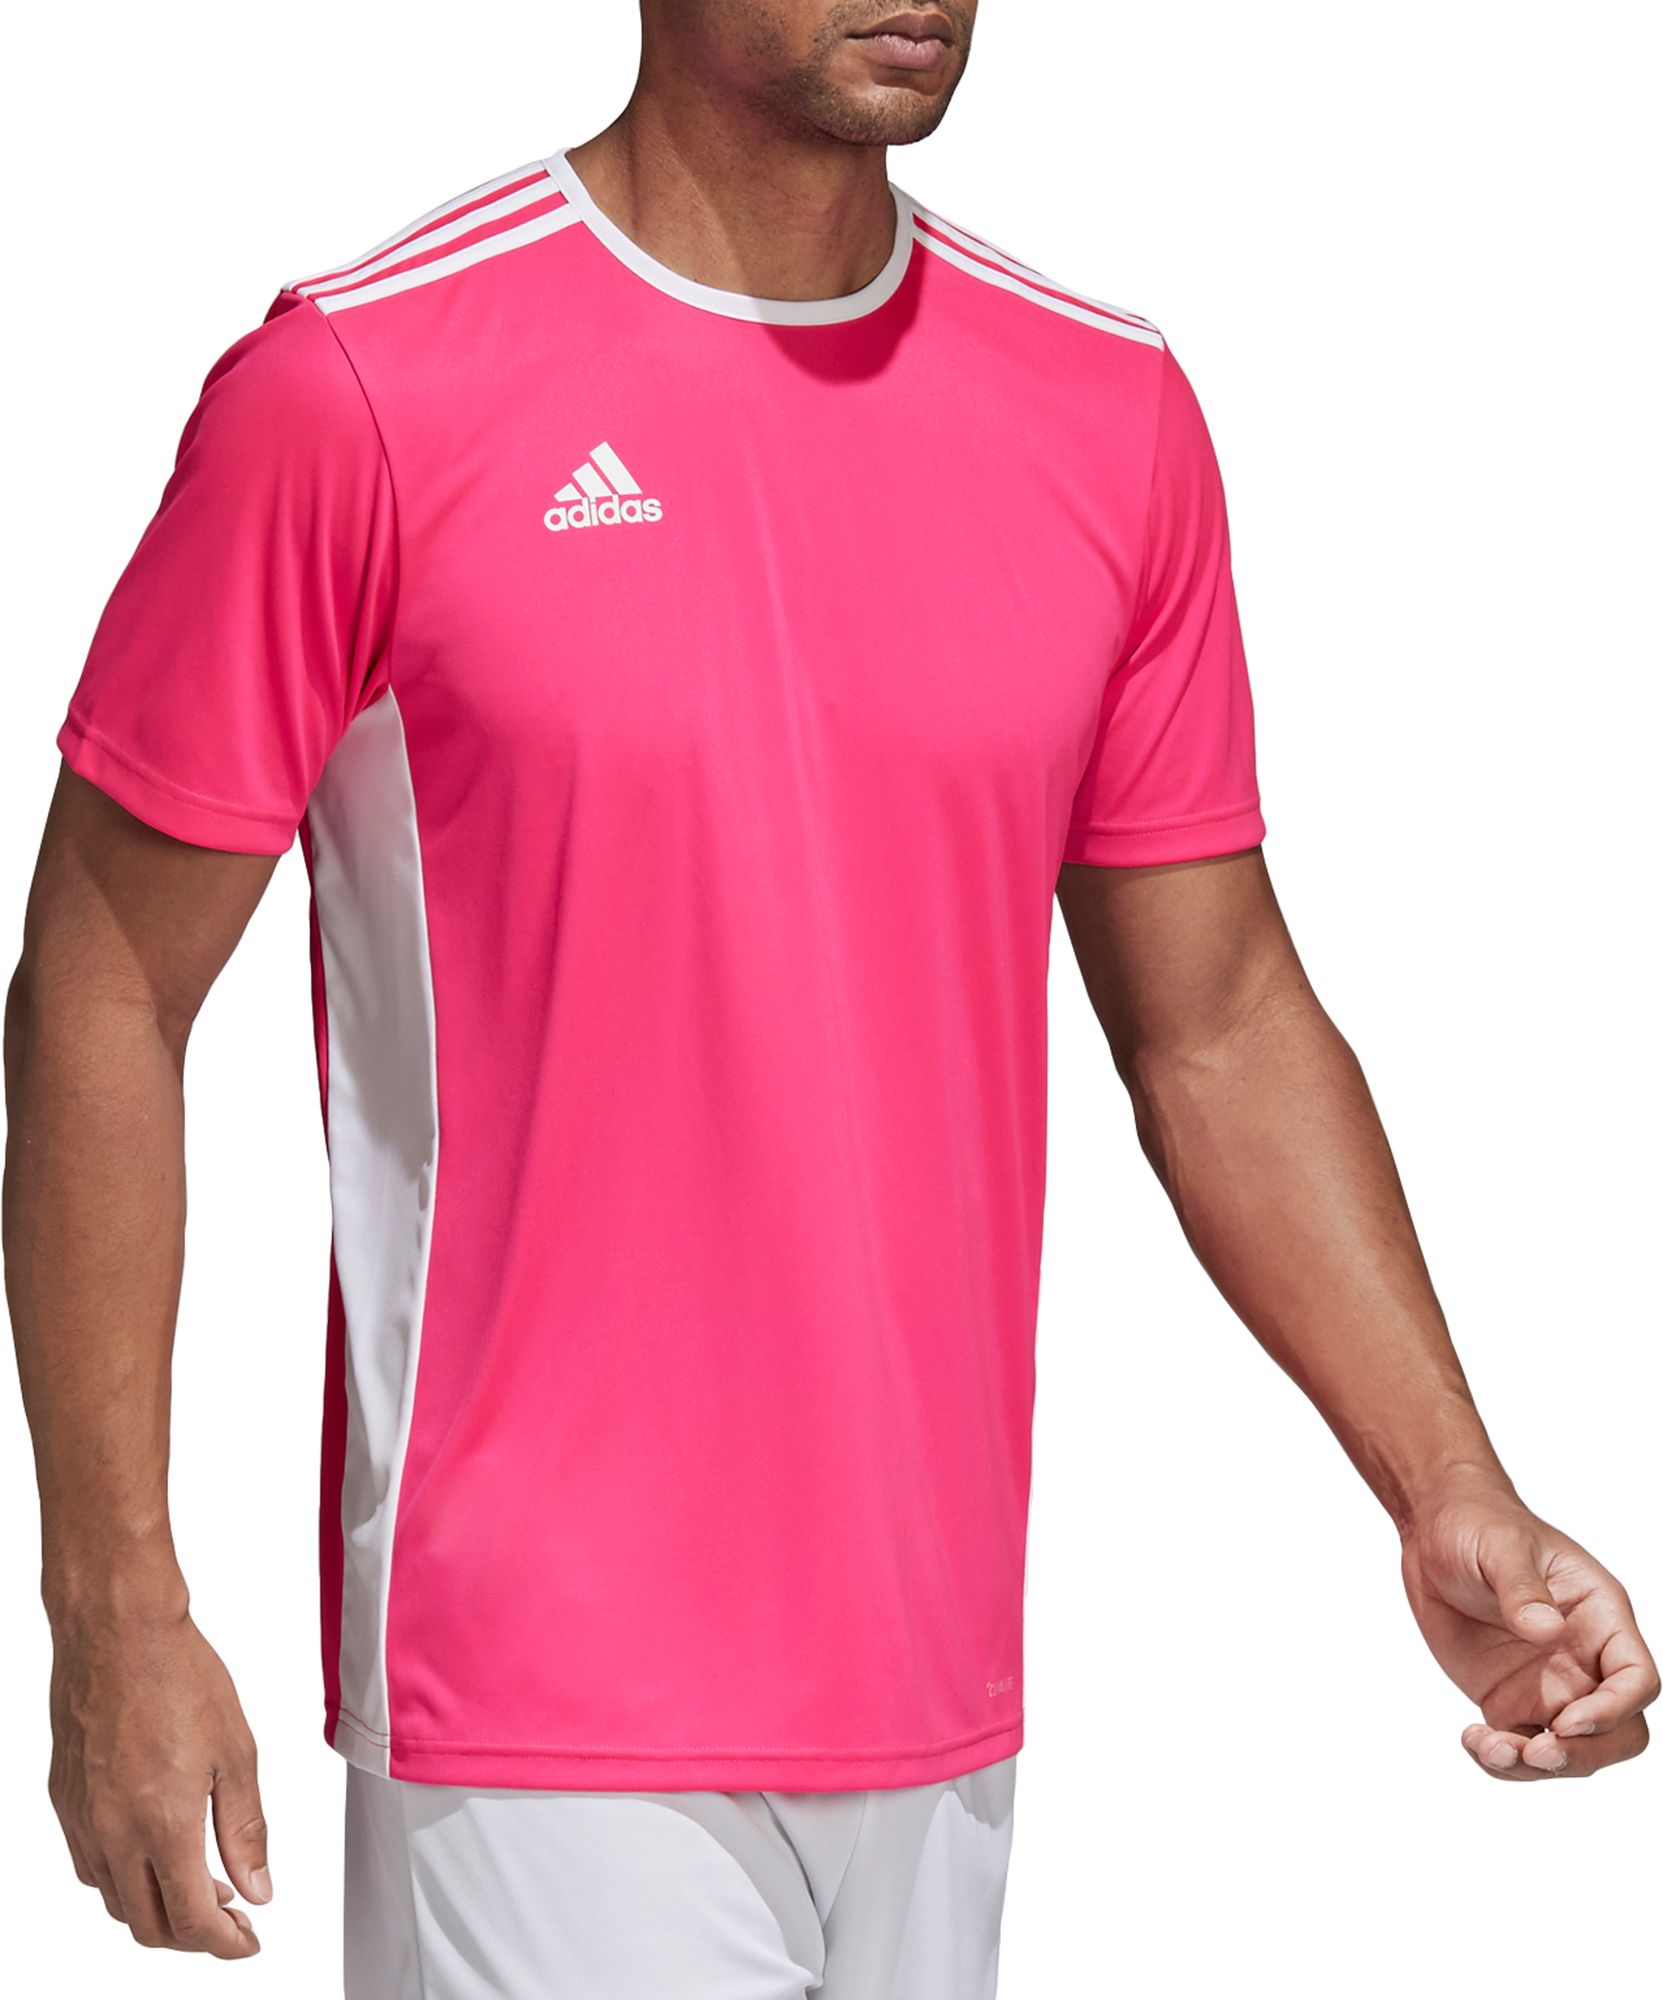 adidas entrada 18 jersey pink